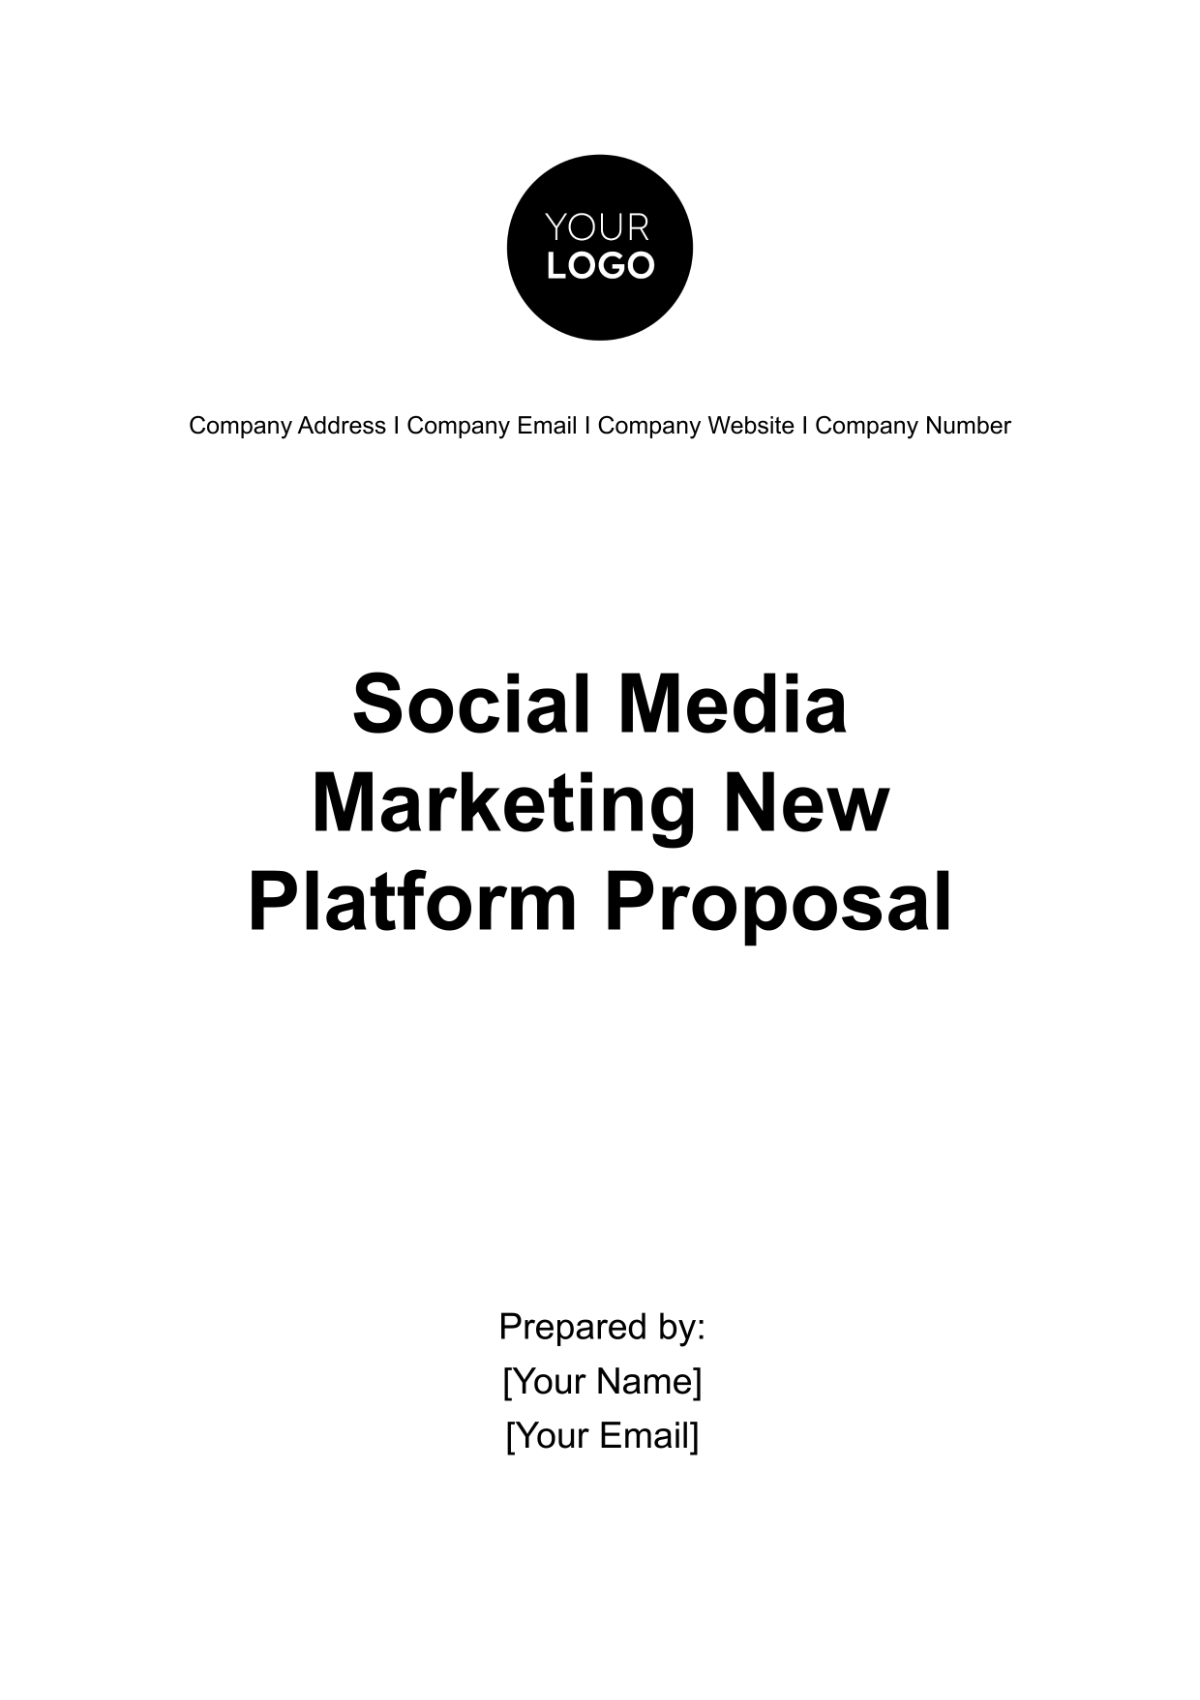 Social Media Marketing New Platform Proposal Template